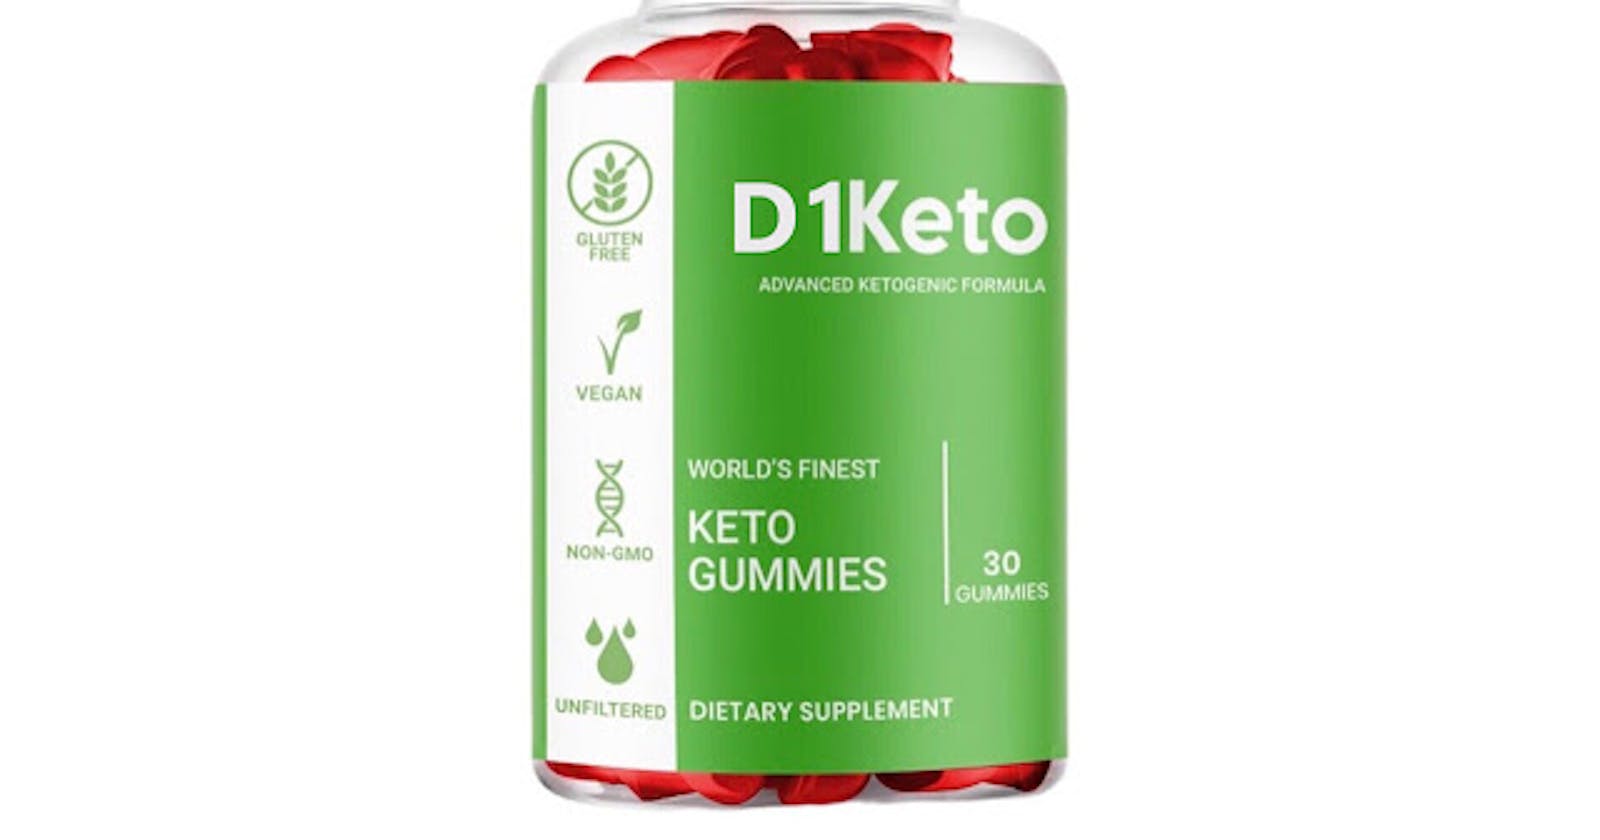 Achieve Ketosis with D1 Keto Gummies